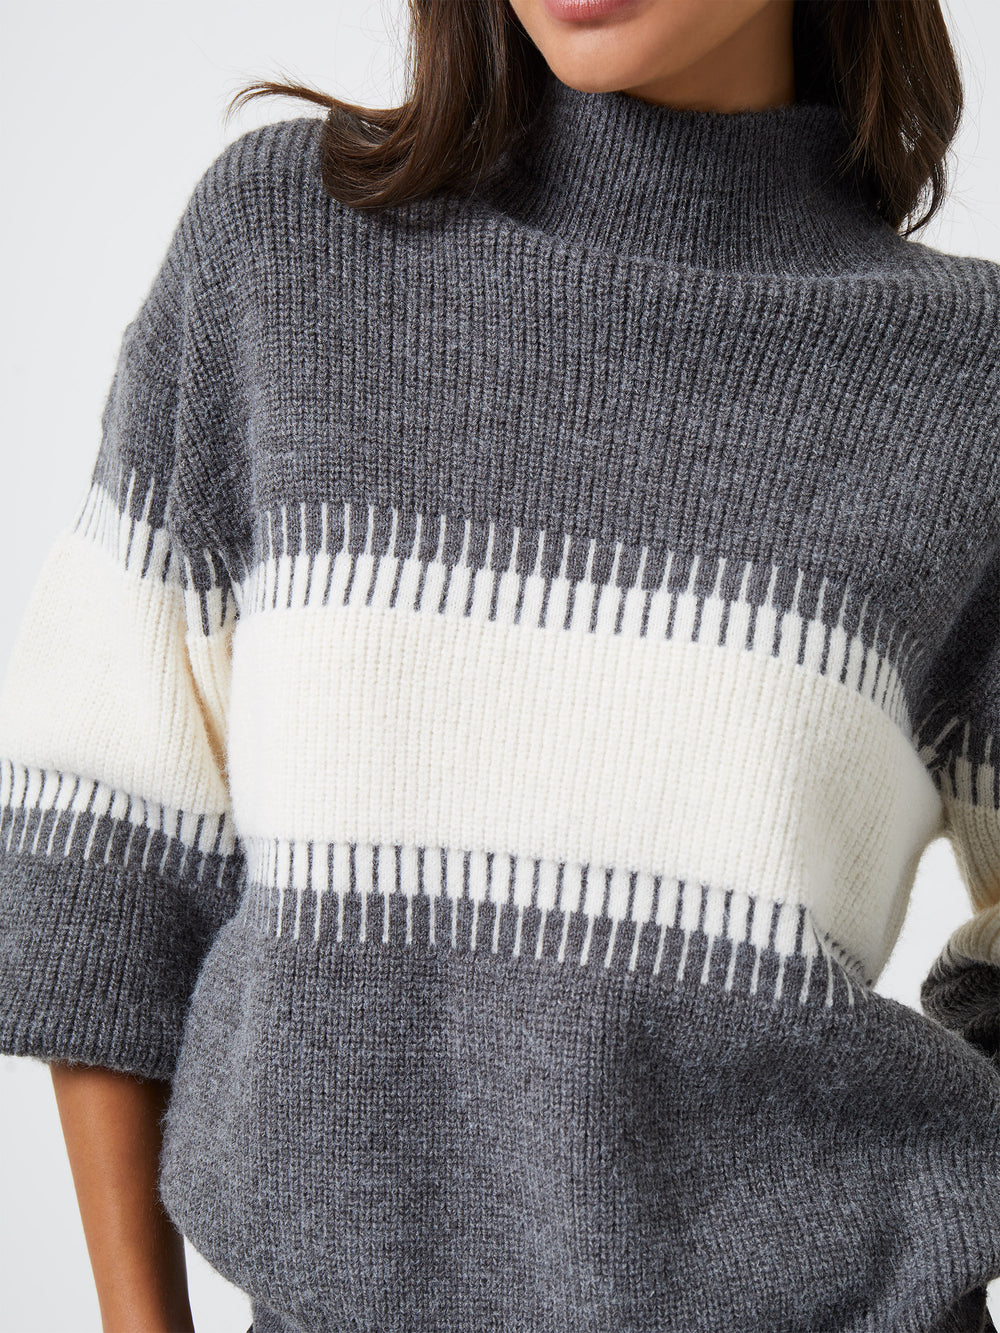 ctls myne jacqaro knit pullover | kdprojectltd.com